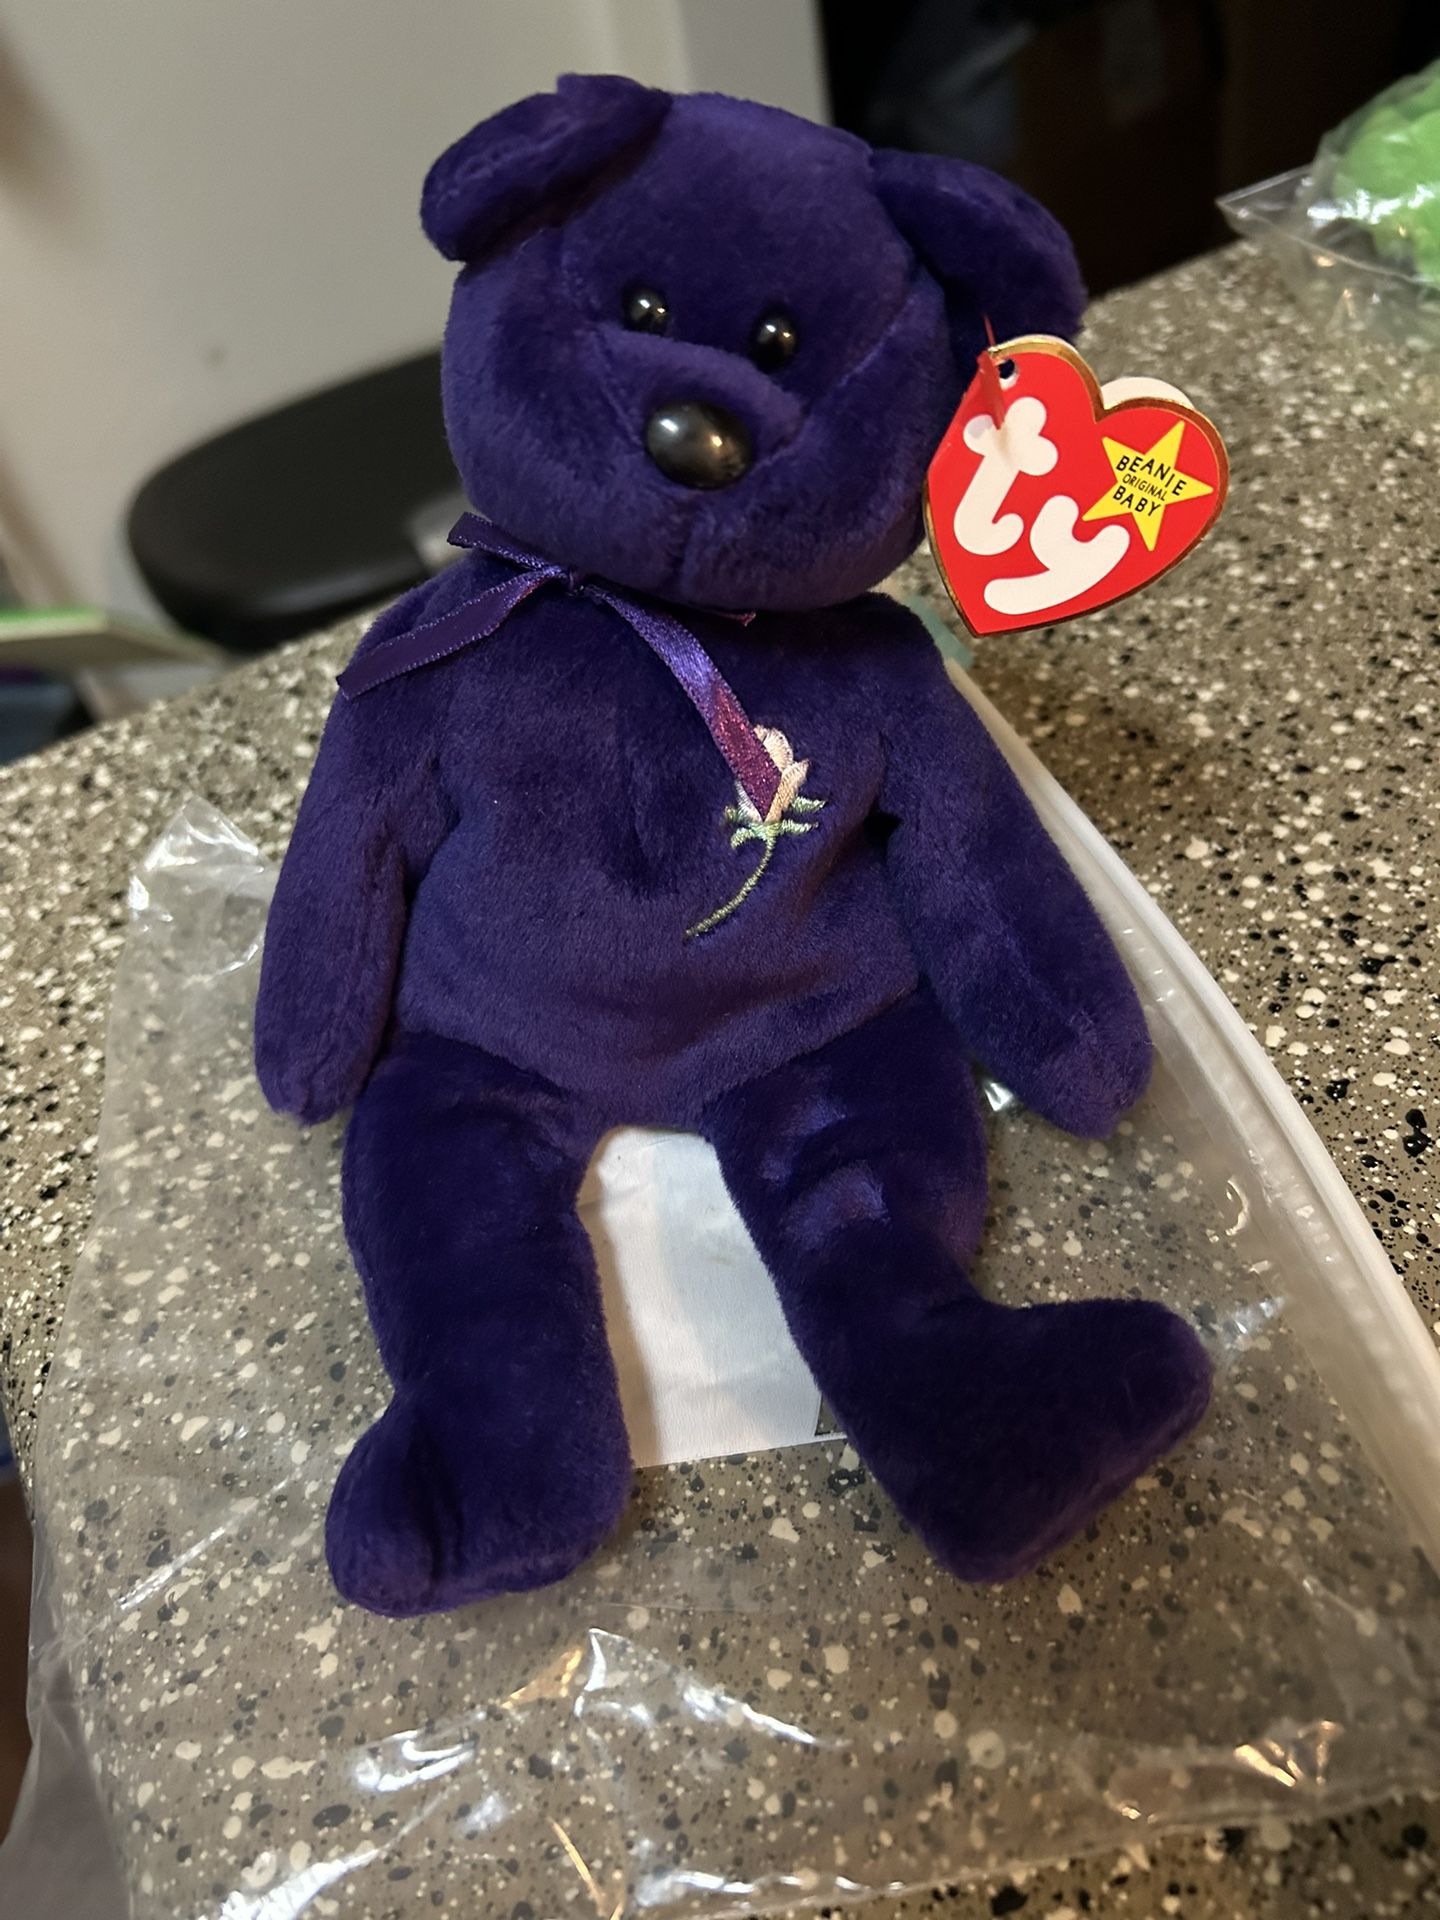 1st Edition 1997 “Princess” Purple Bear Beanie Baby